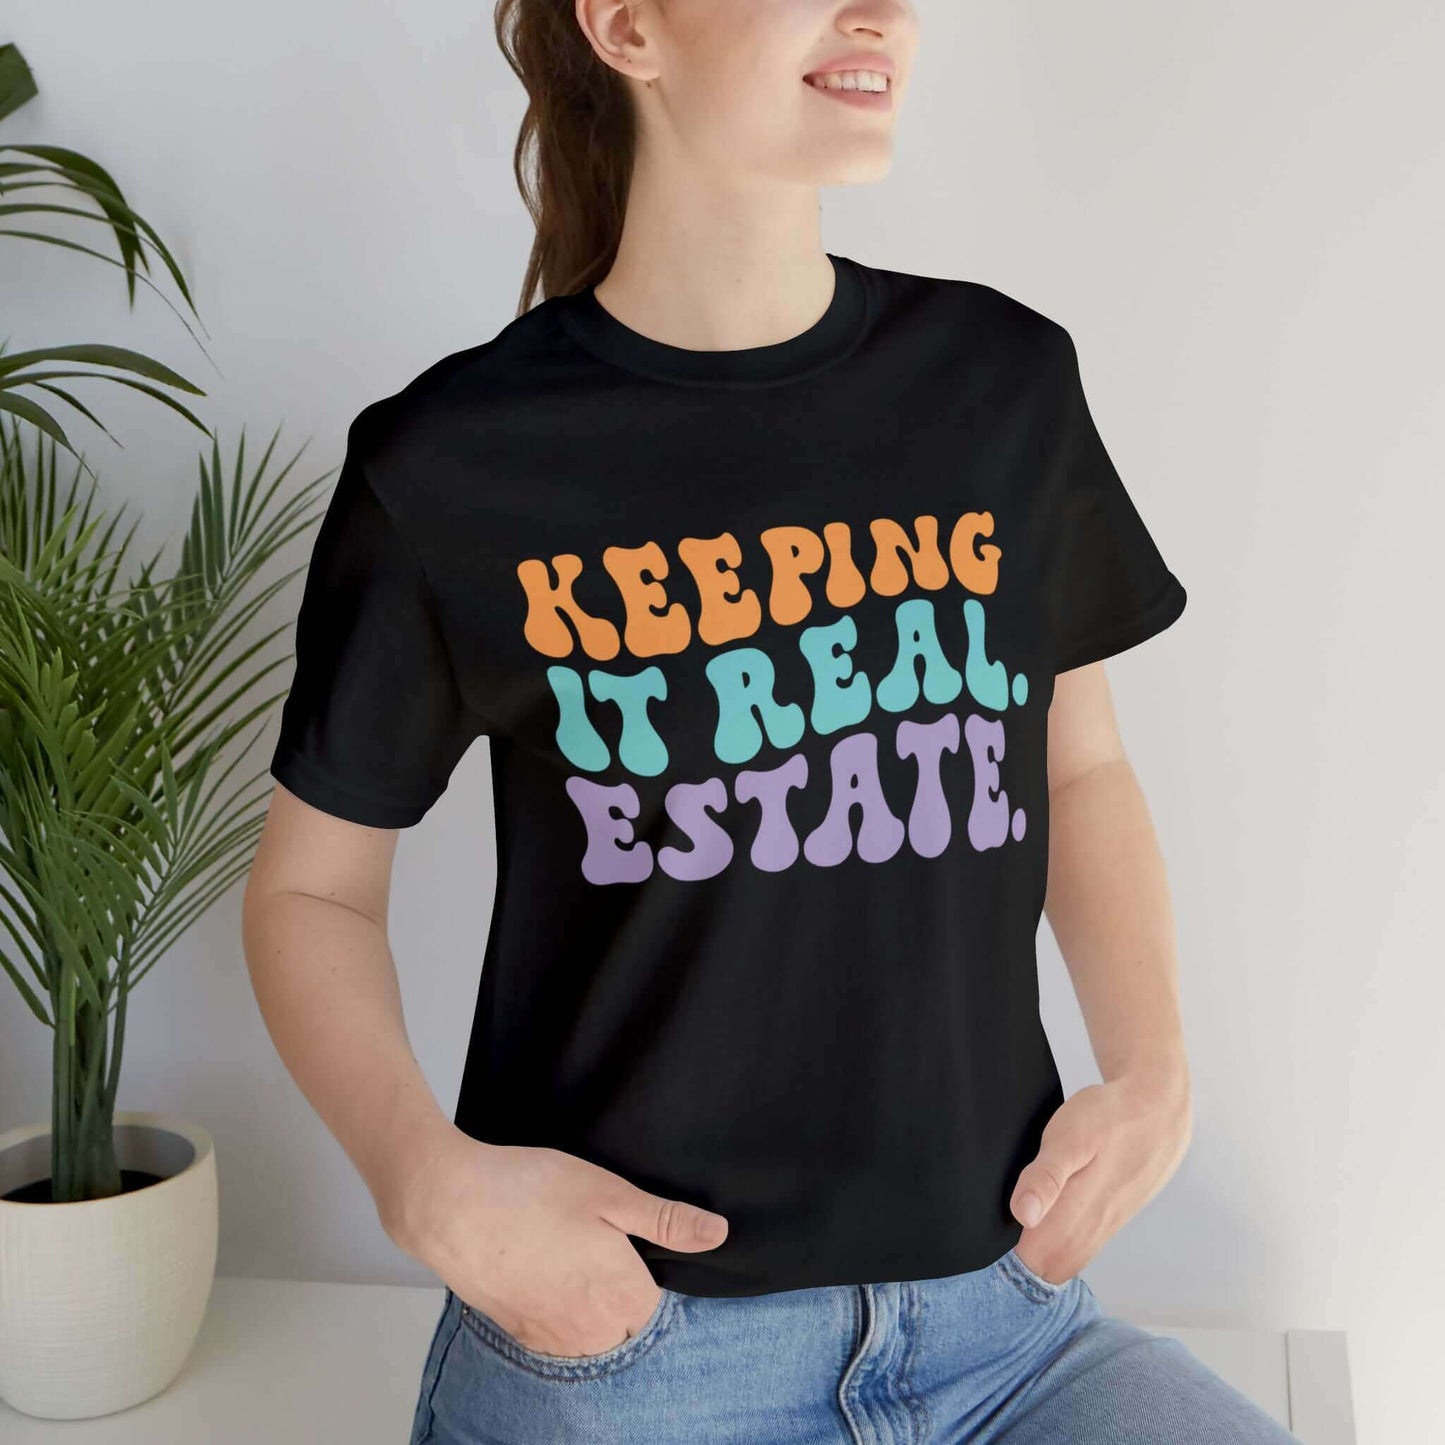 Keeping It Real Estate Shirt, Retro Real Estate Agent Shirt